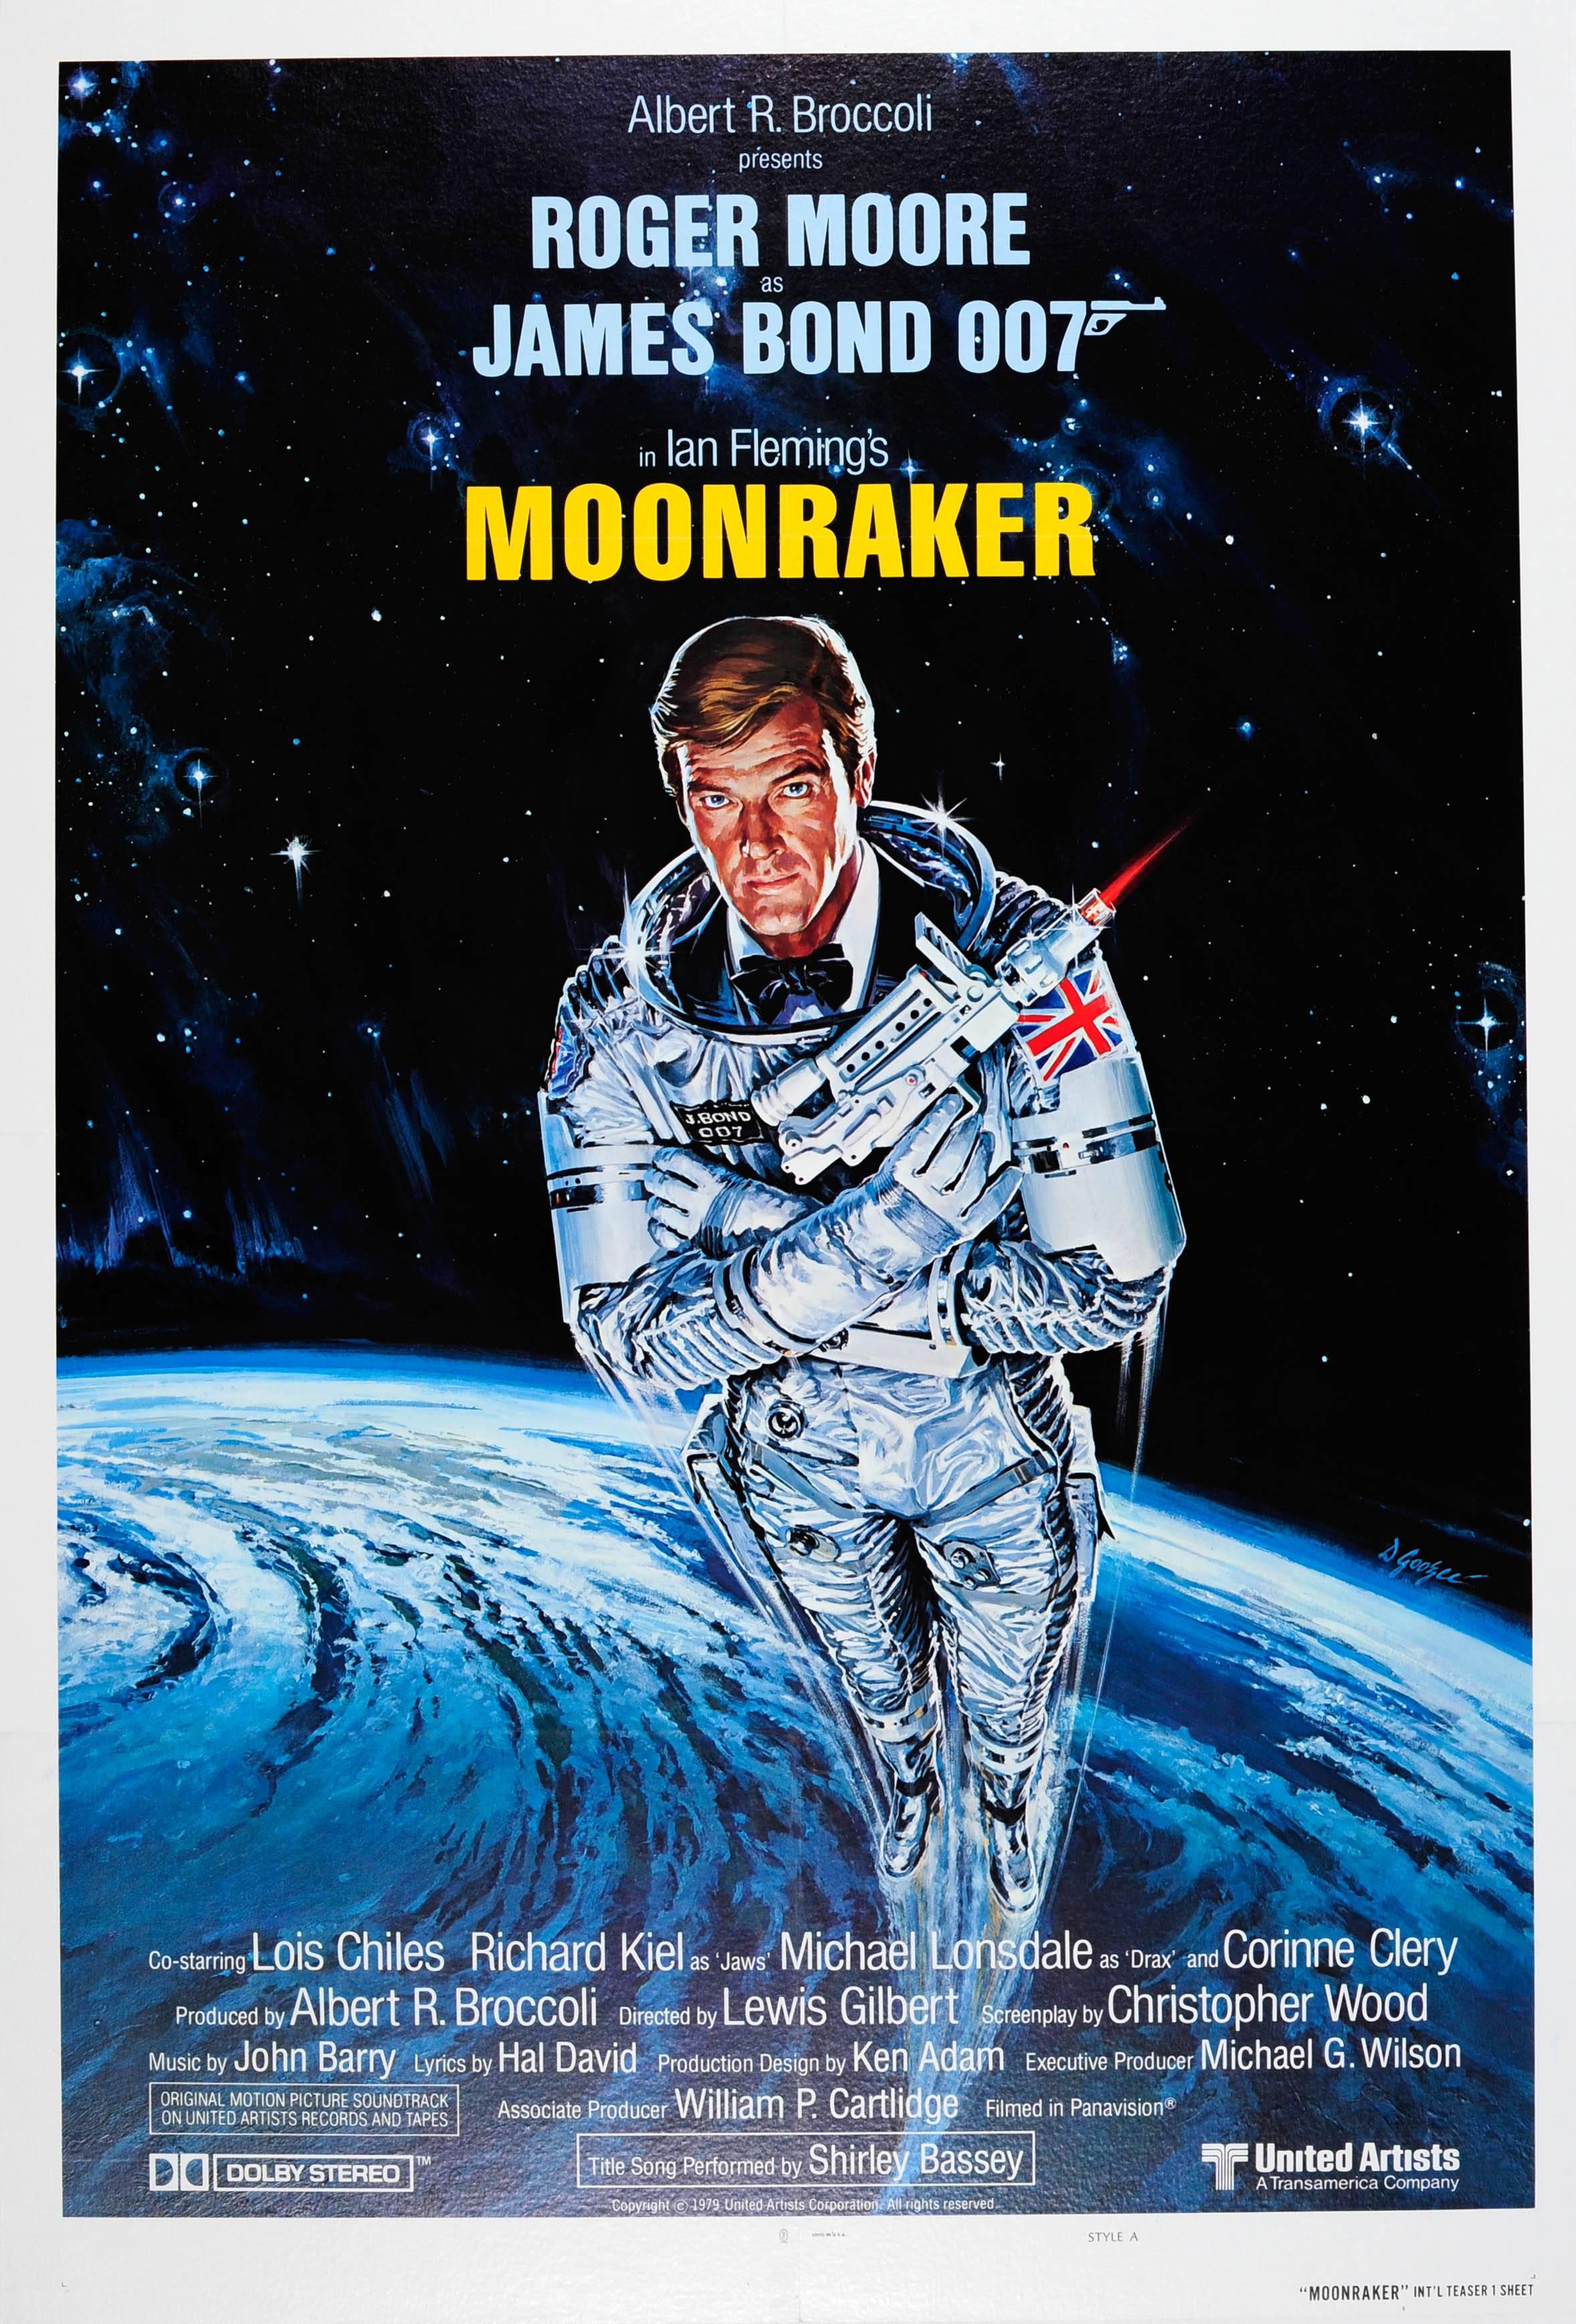 Dan Goozee Print - Original Vintage James Bond Poster By Daniel Goozee For the 007 Movie, Moonraker